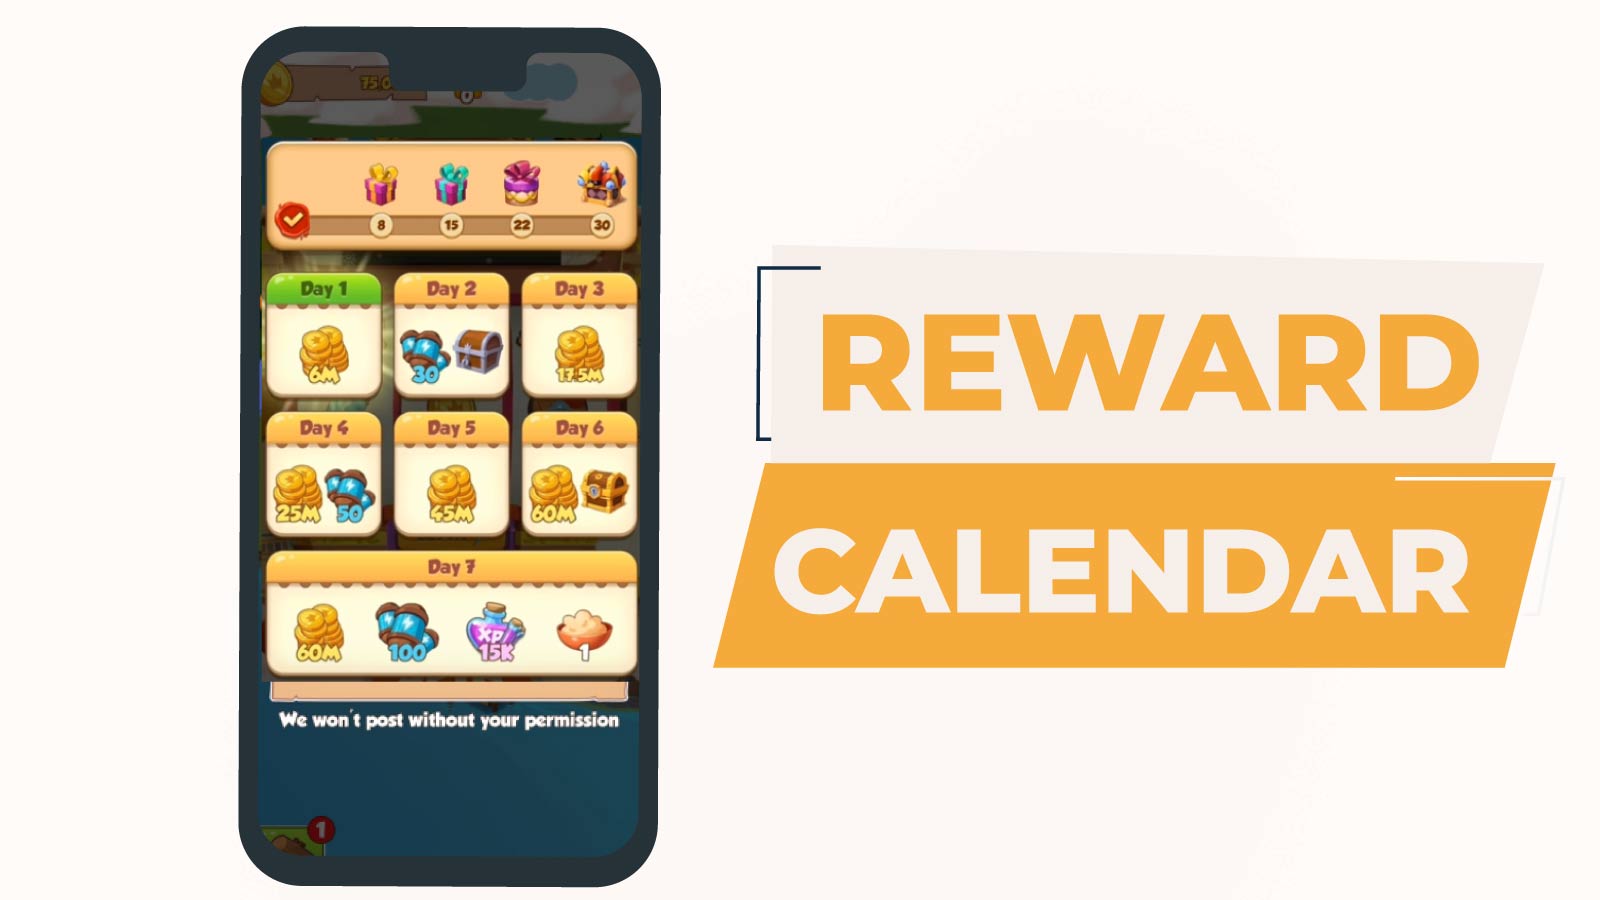 Reward Calendar Free Daily Spins for Coin Master